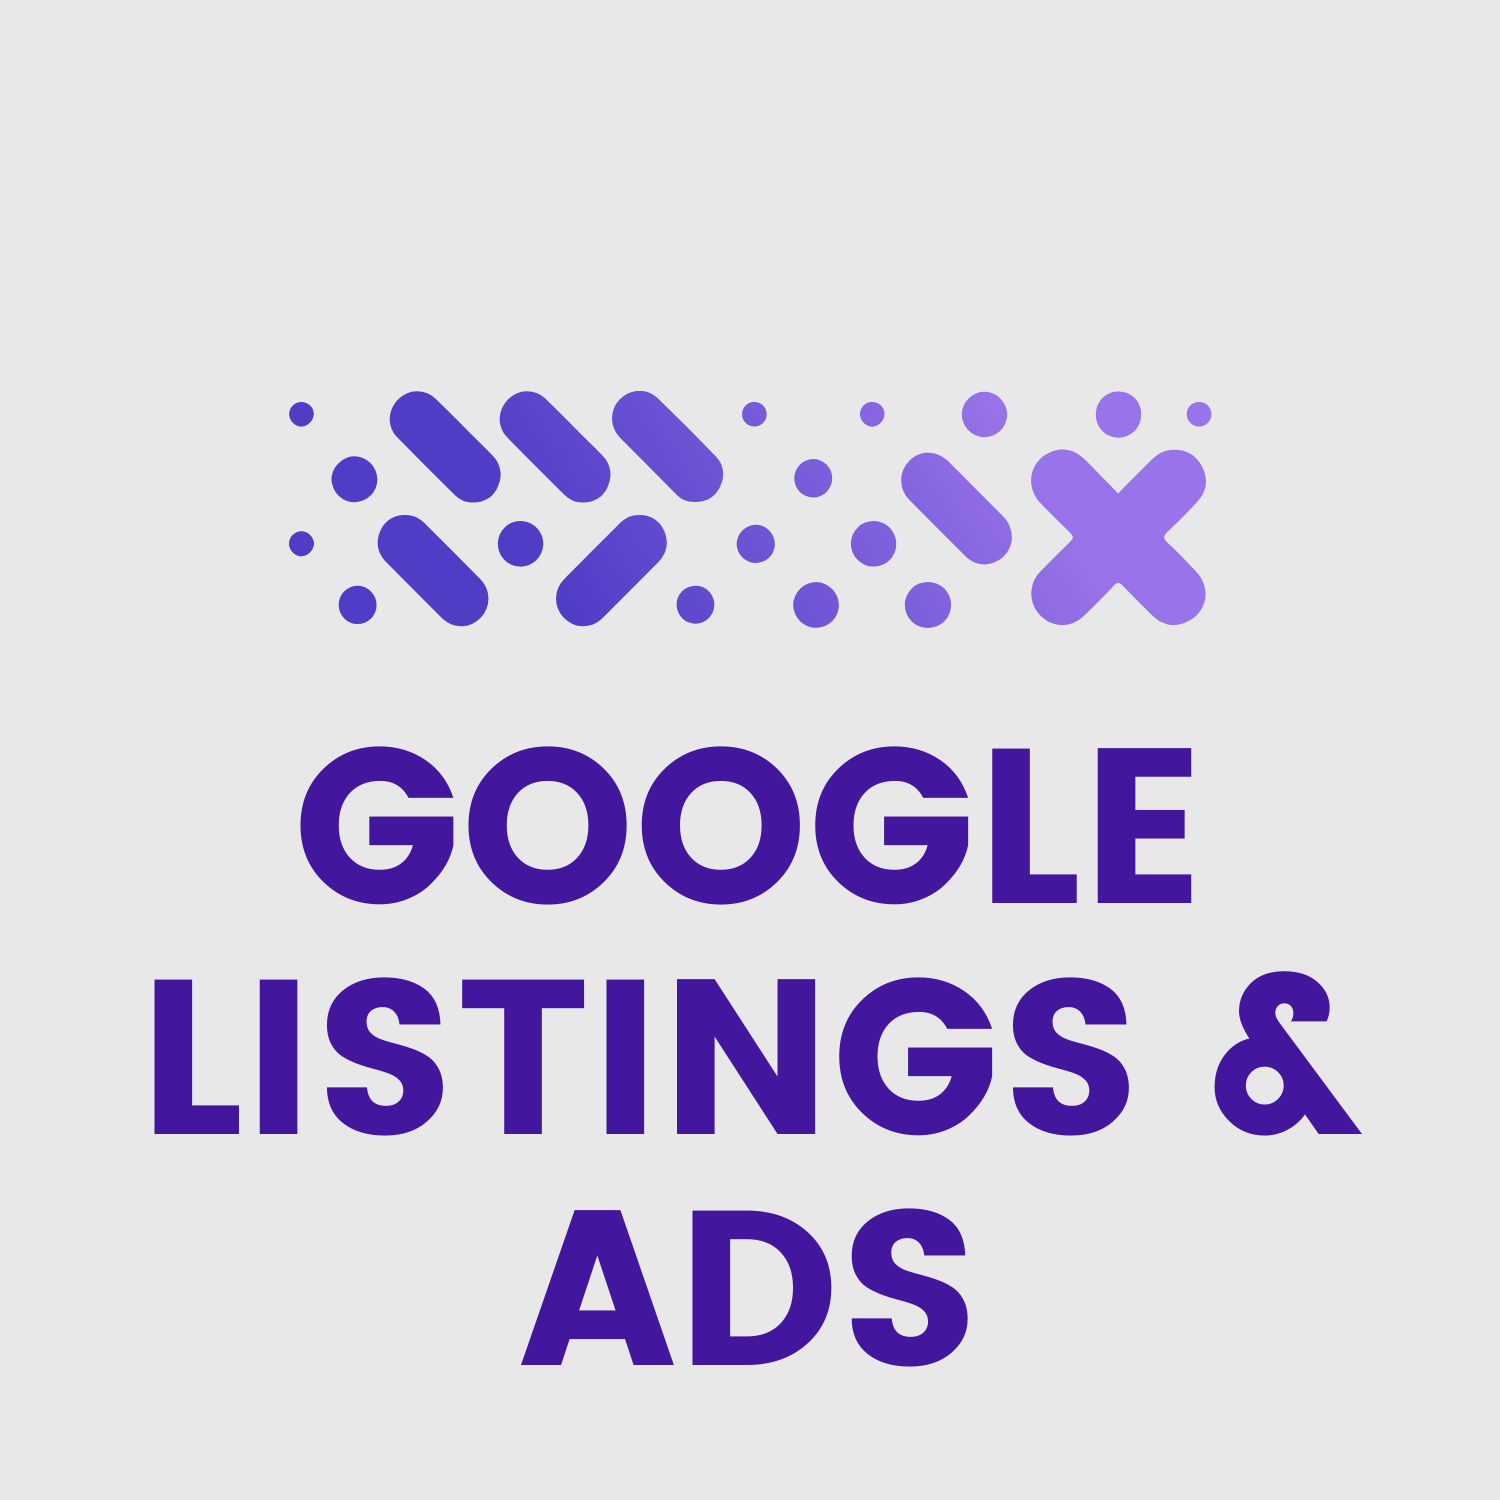 Google Listings & Ads